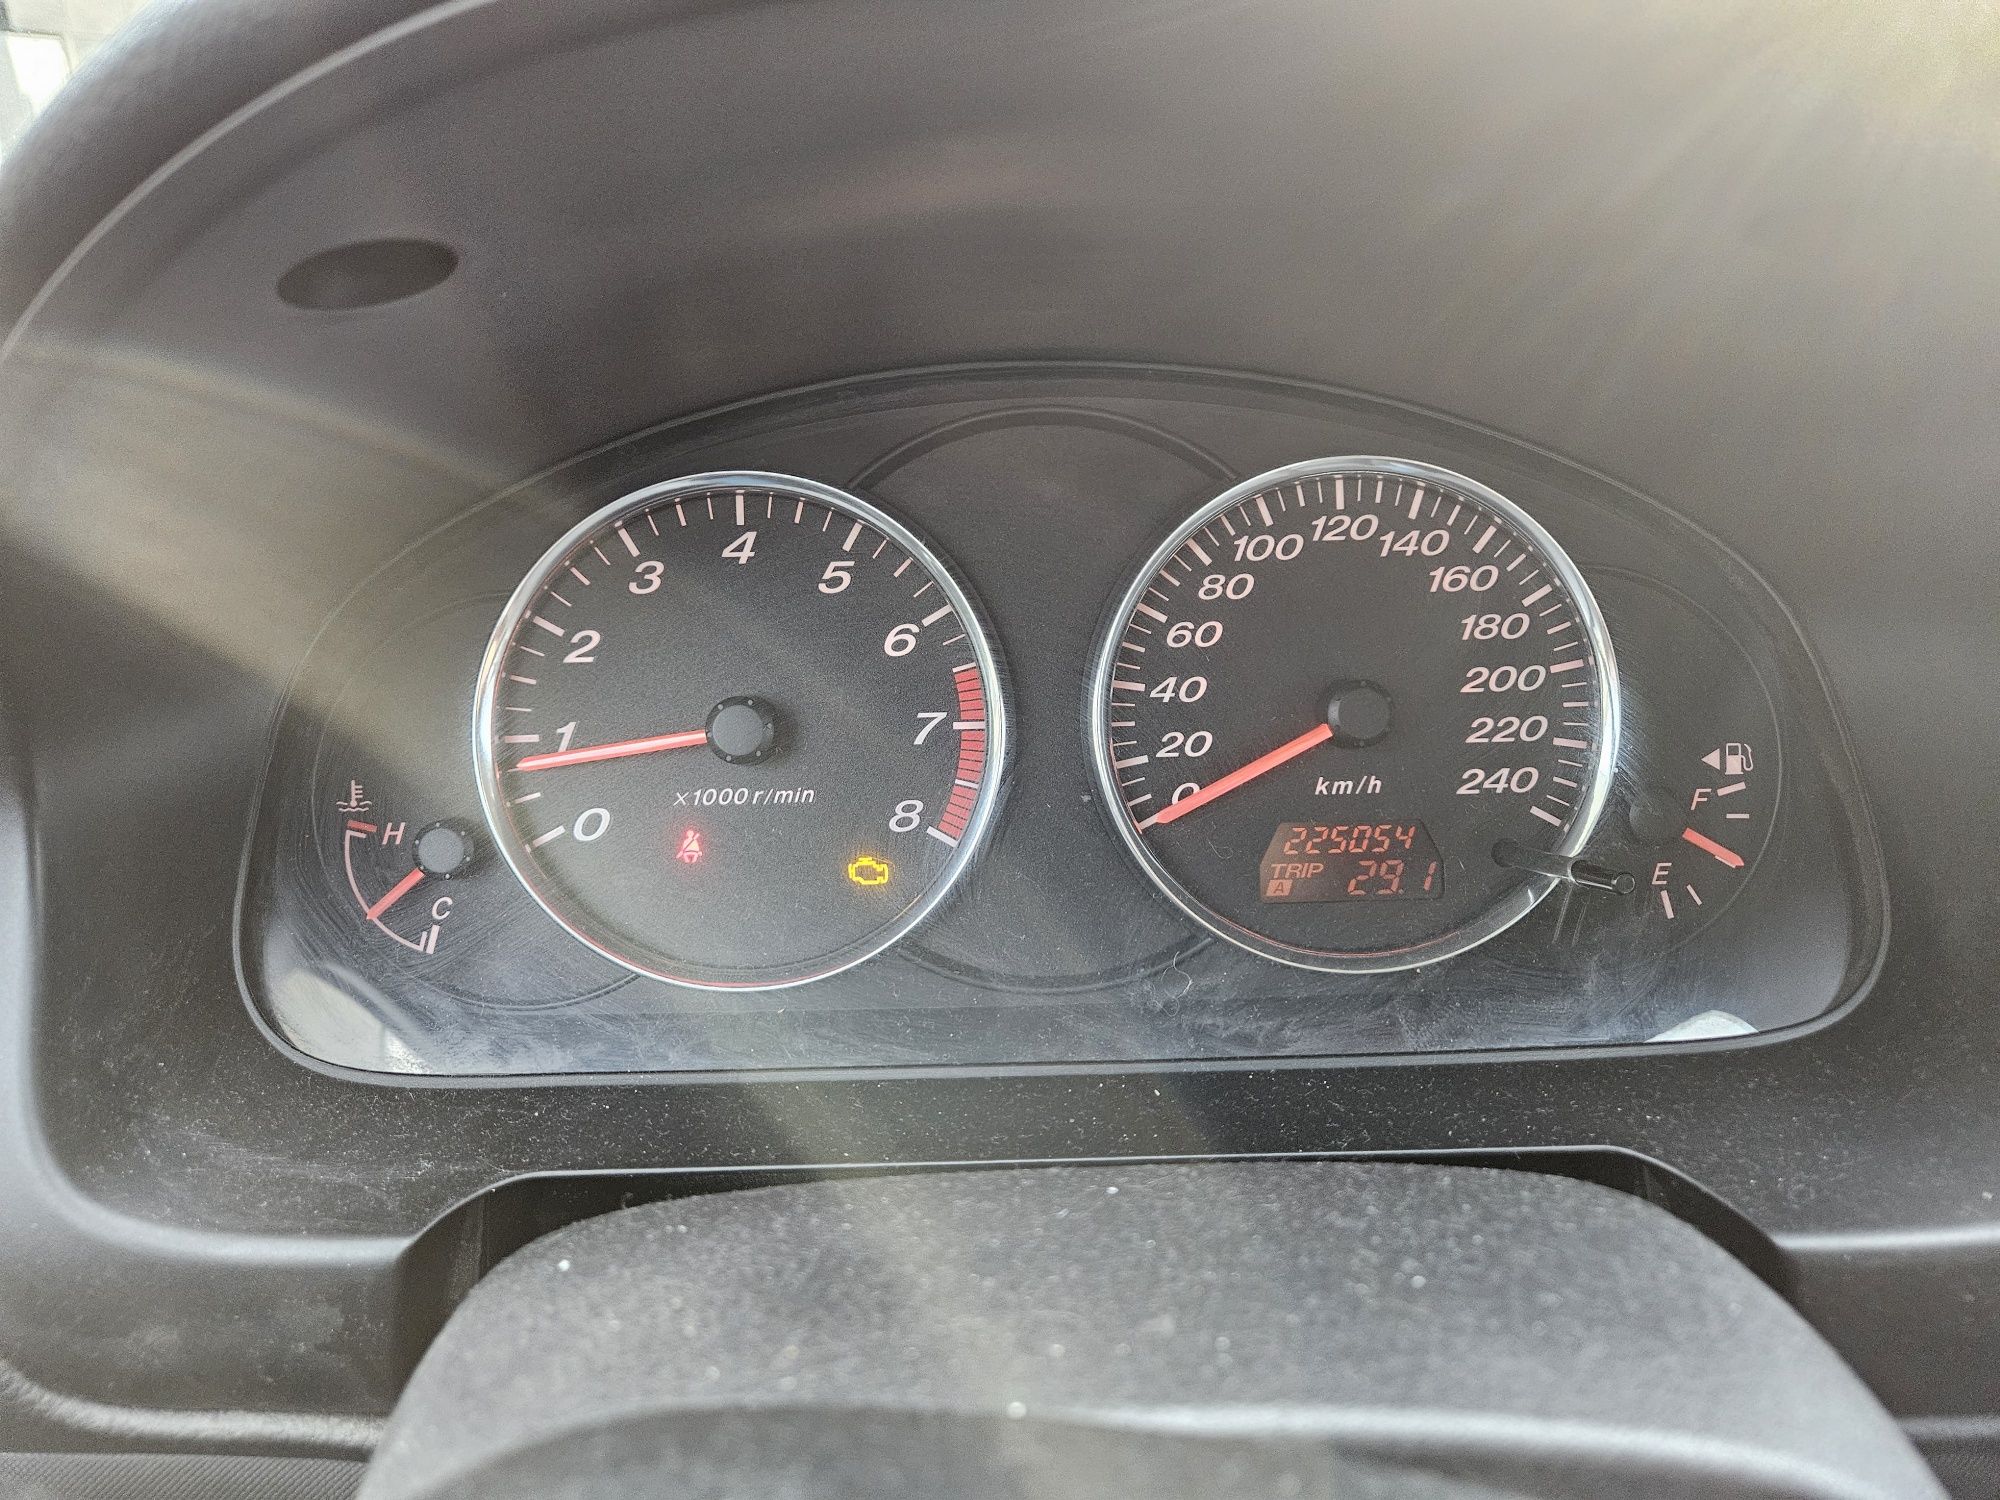 Mazda 6, 1.8 benzyna